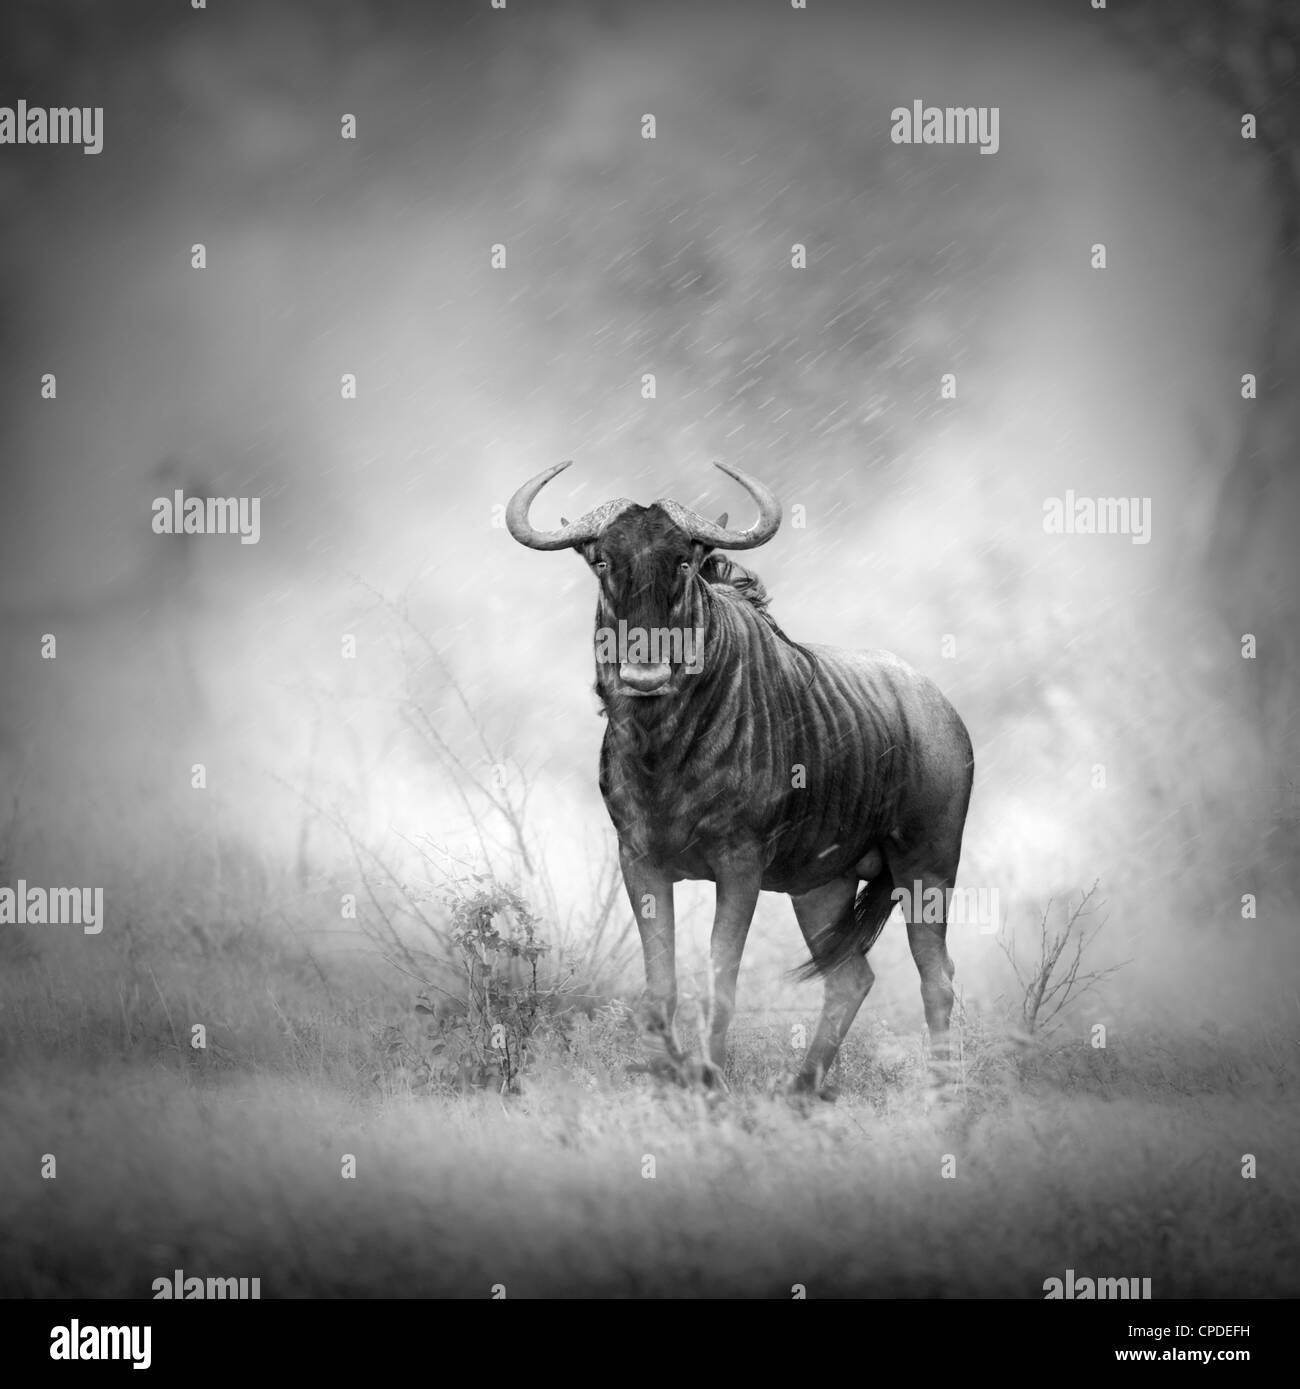 Blue Wildebeest in Rainstorm (Artistic processing) Stock Photo